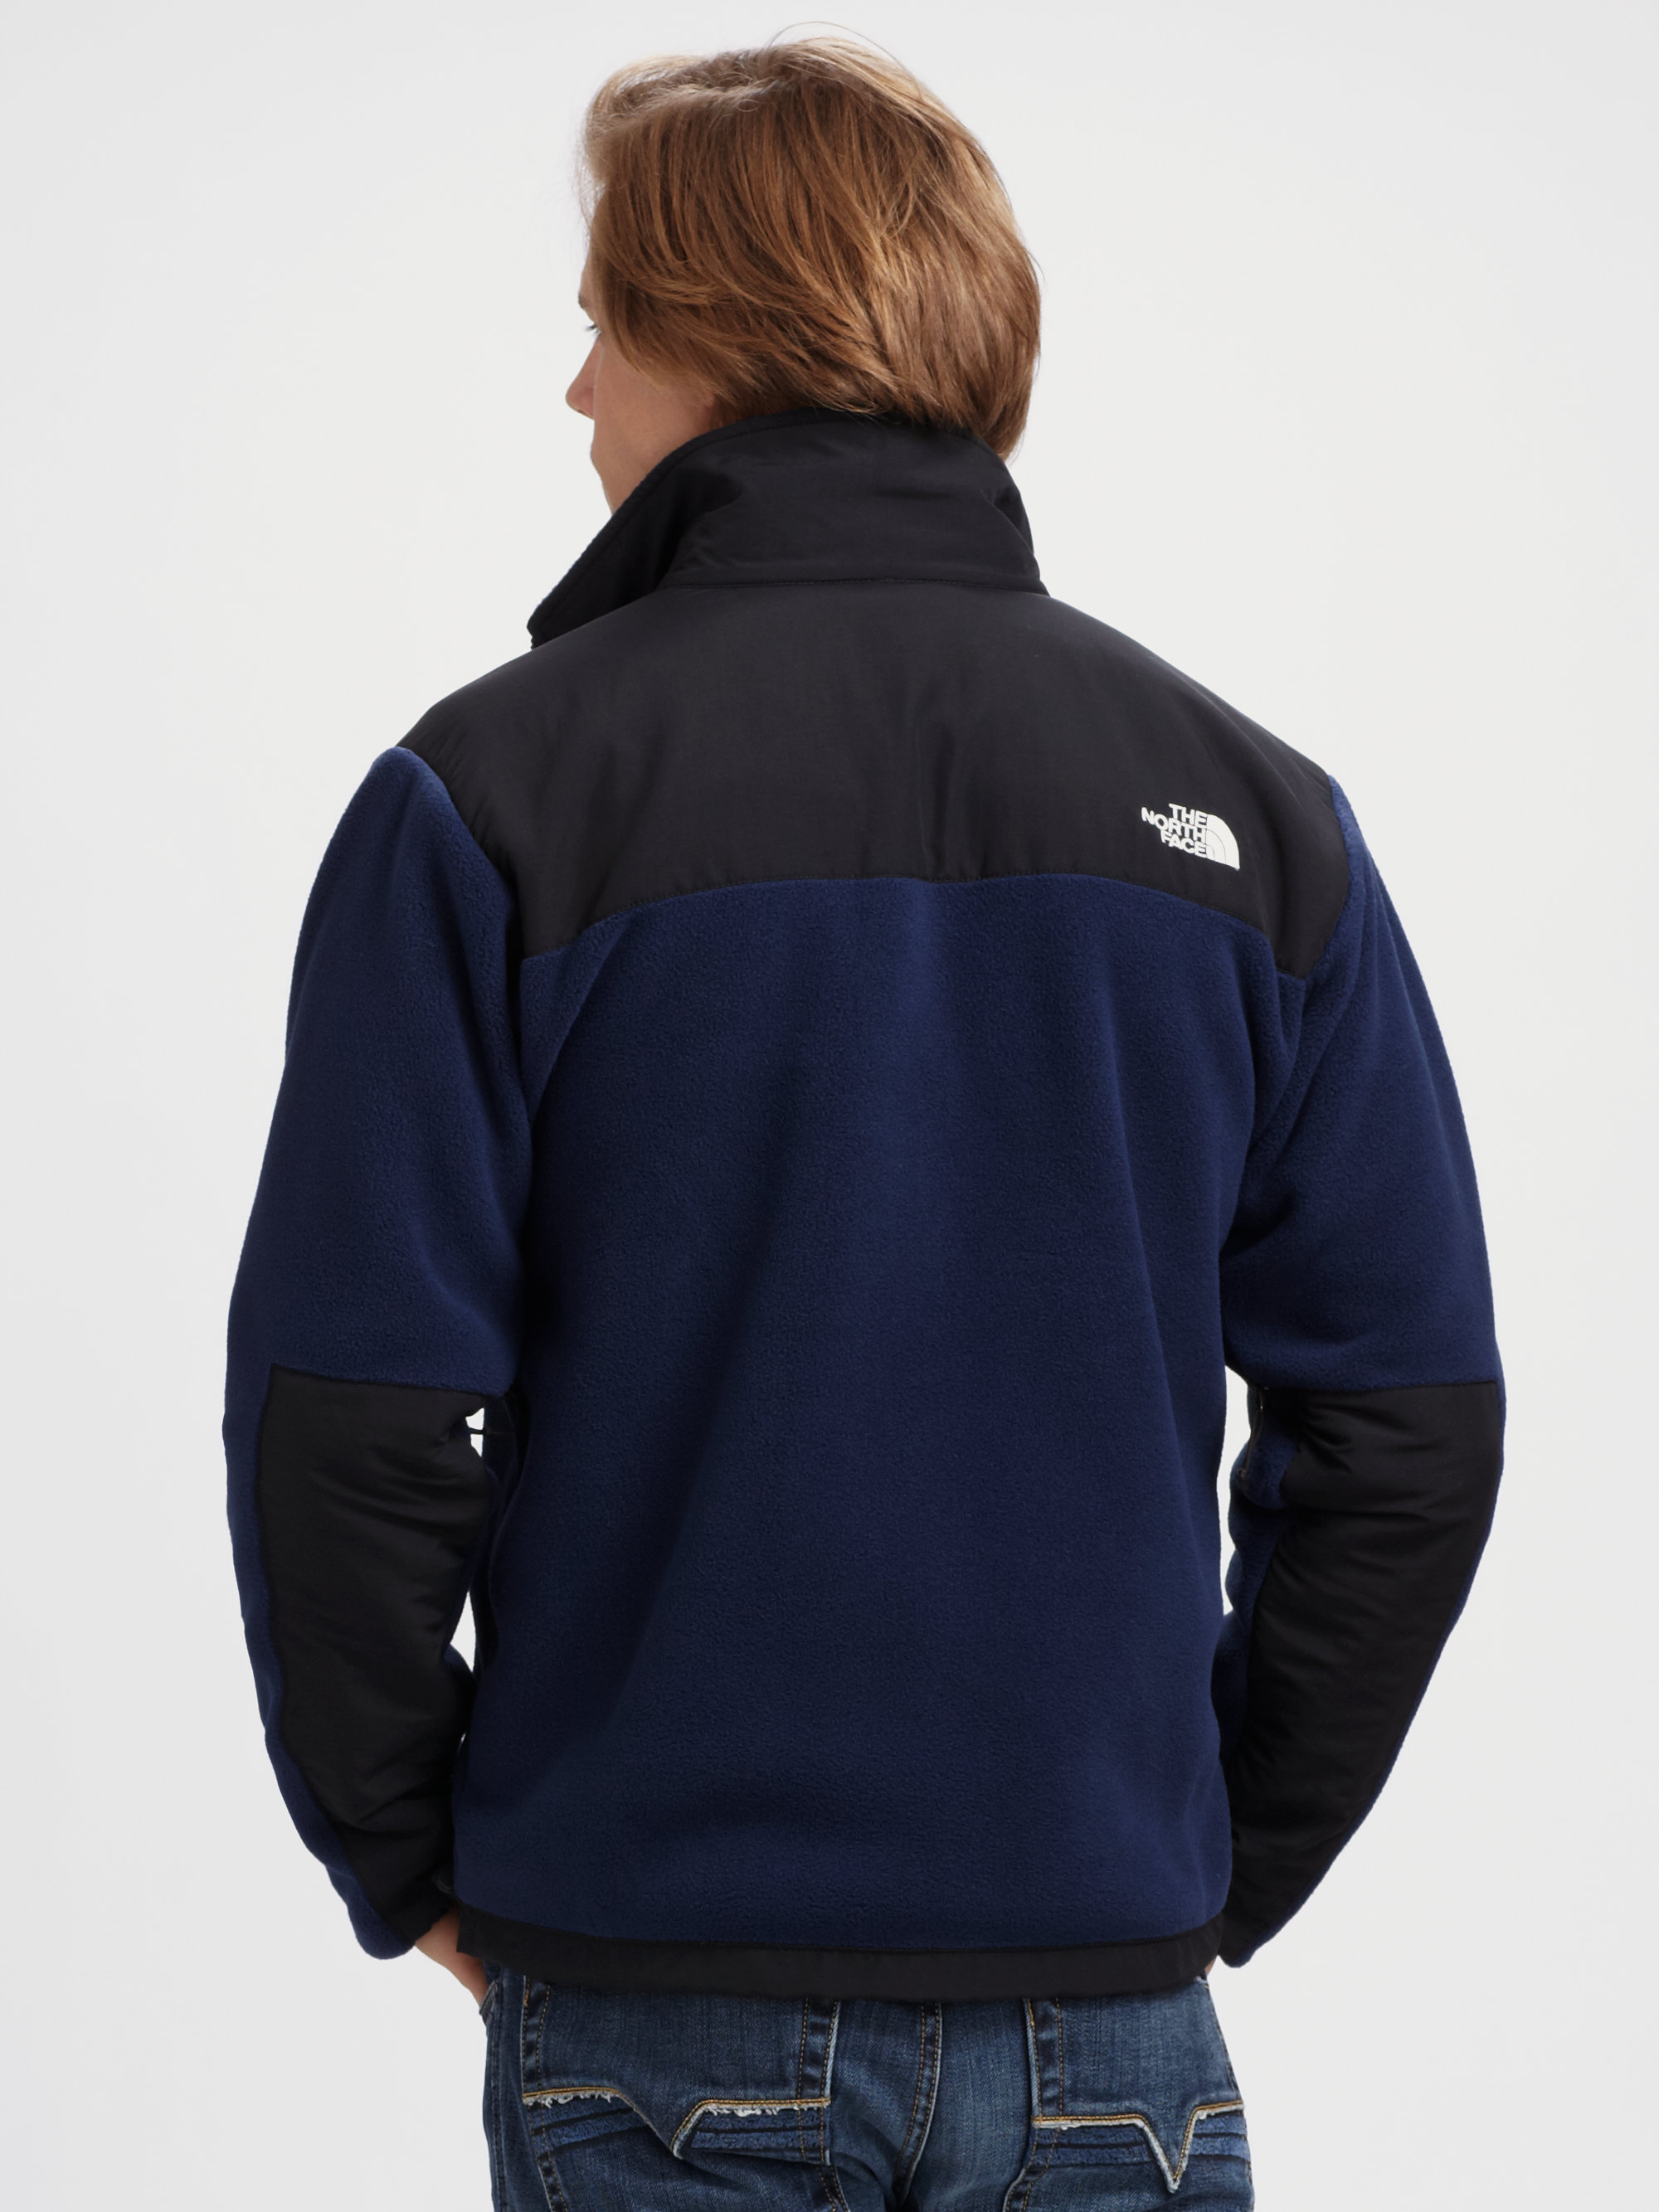 The North Face Denali Fleece Jacket in Blue for Men - Lyst